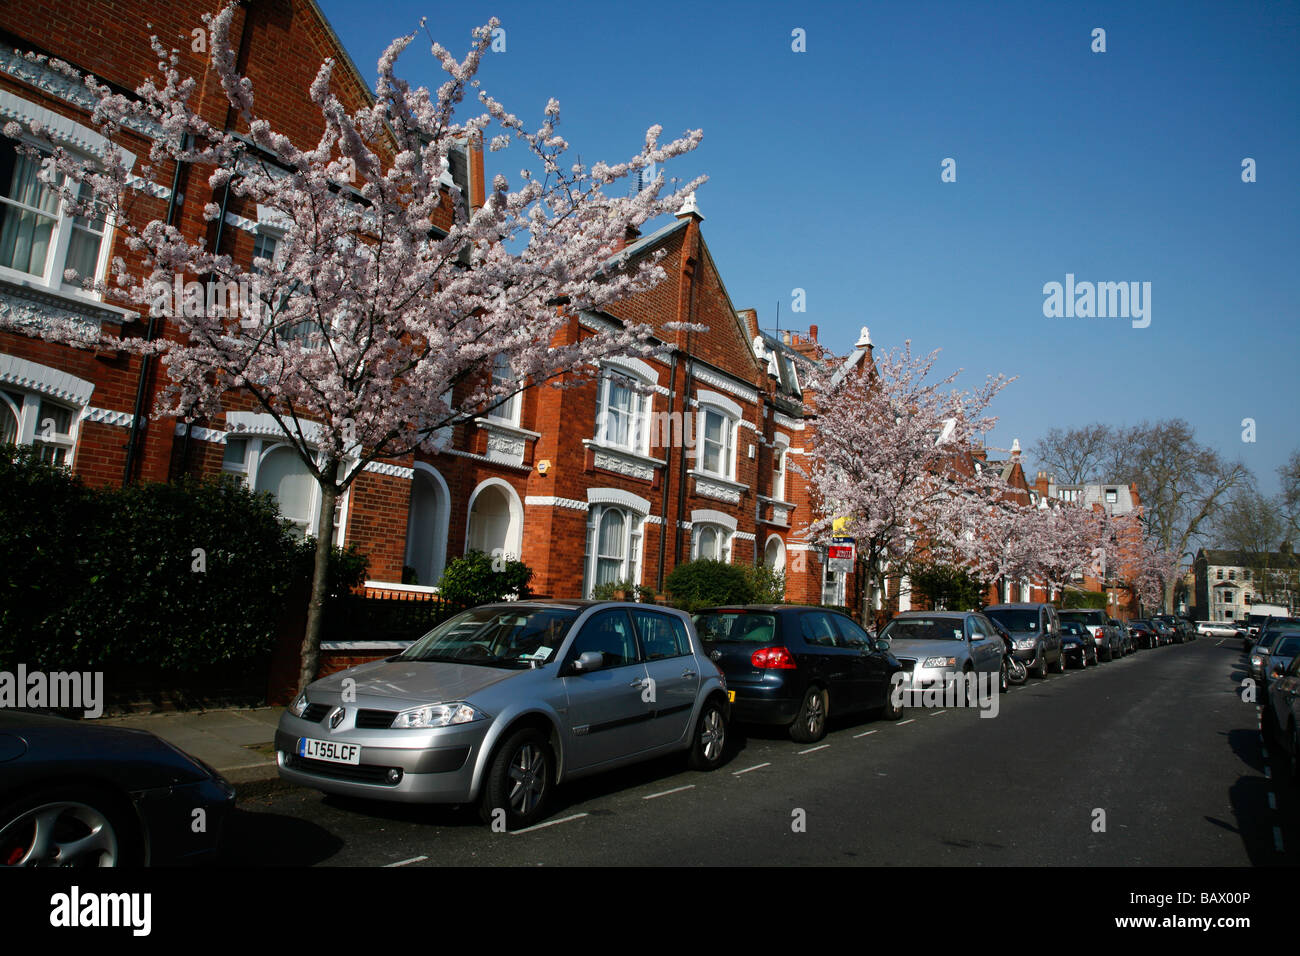 Cherry blossom on Quarrendon Street, Fulham, London Stock Photo